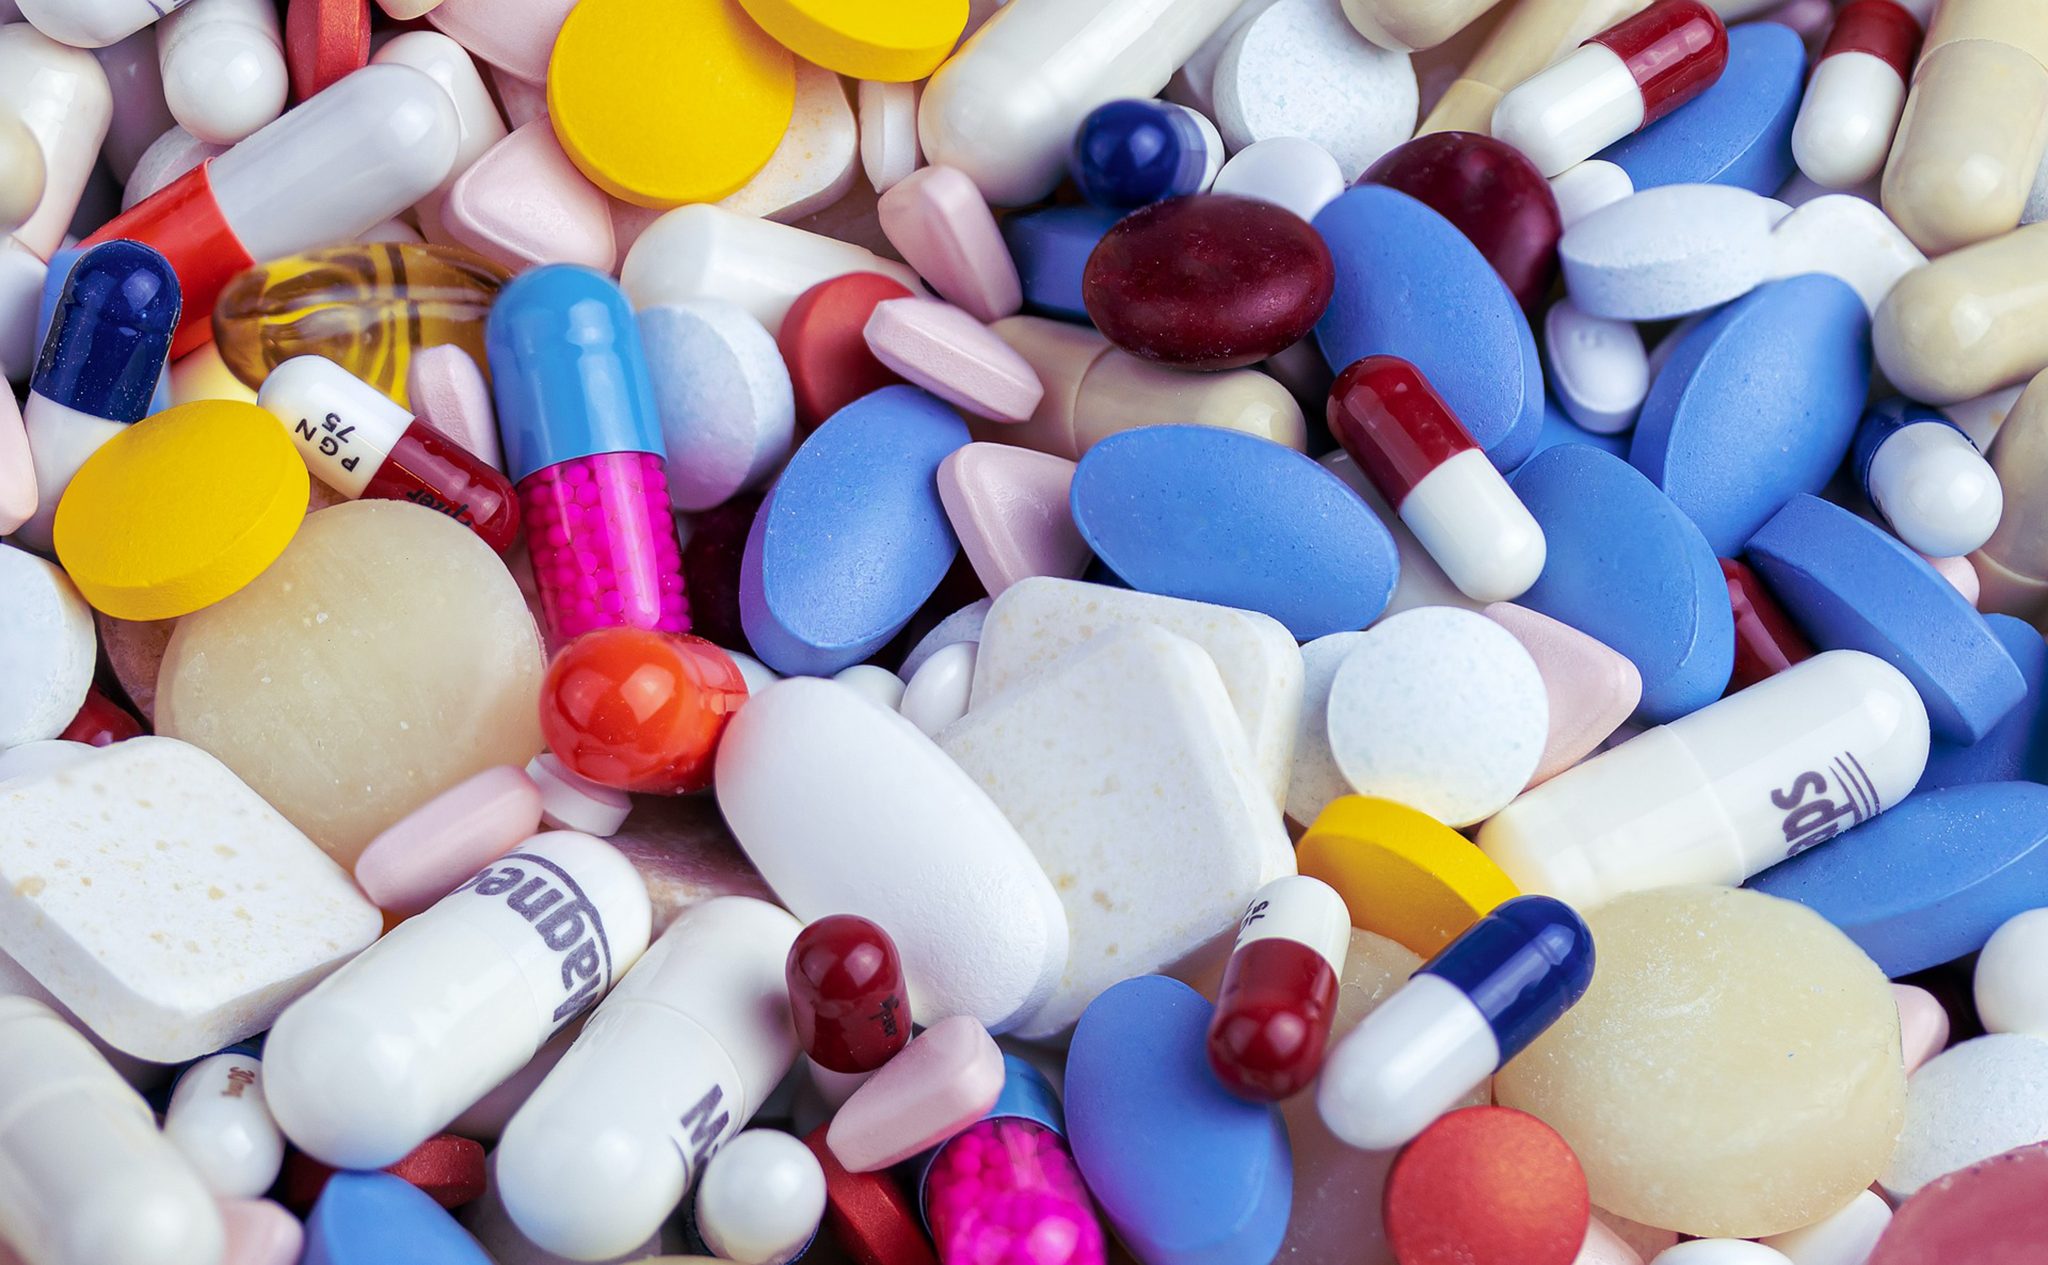 Medication Substance Abuse Mushroom Supplements Taking Supplements white blue and orange medication pill